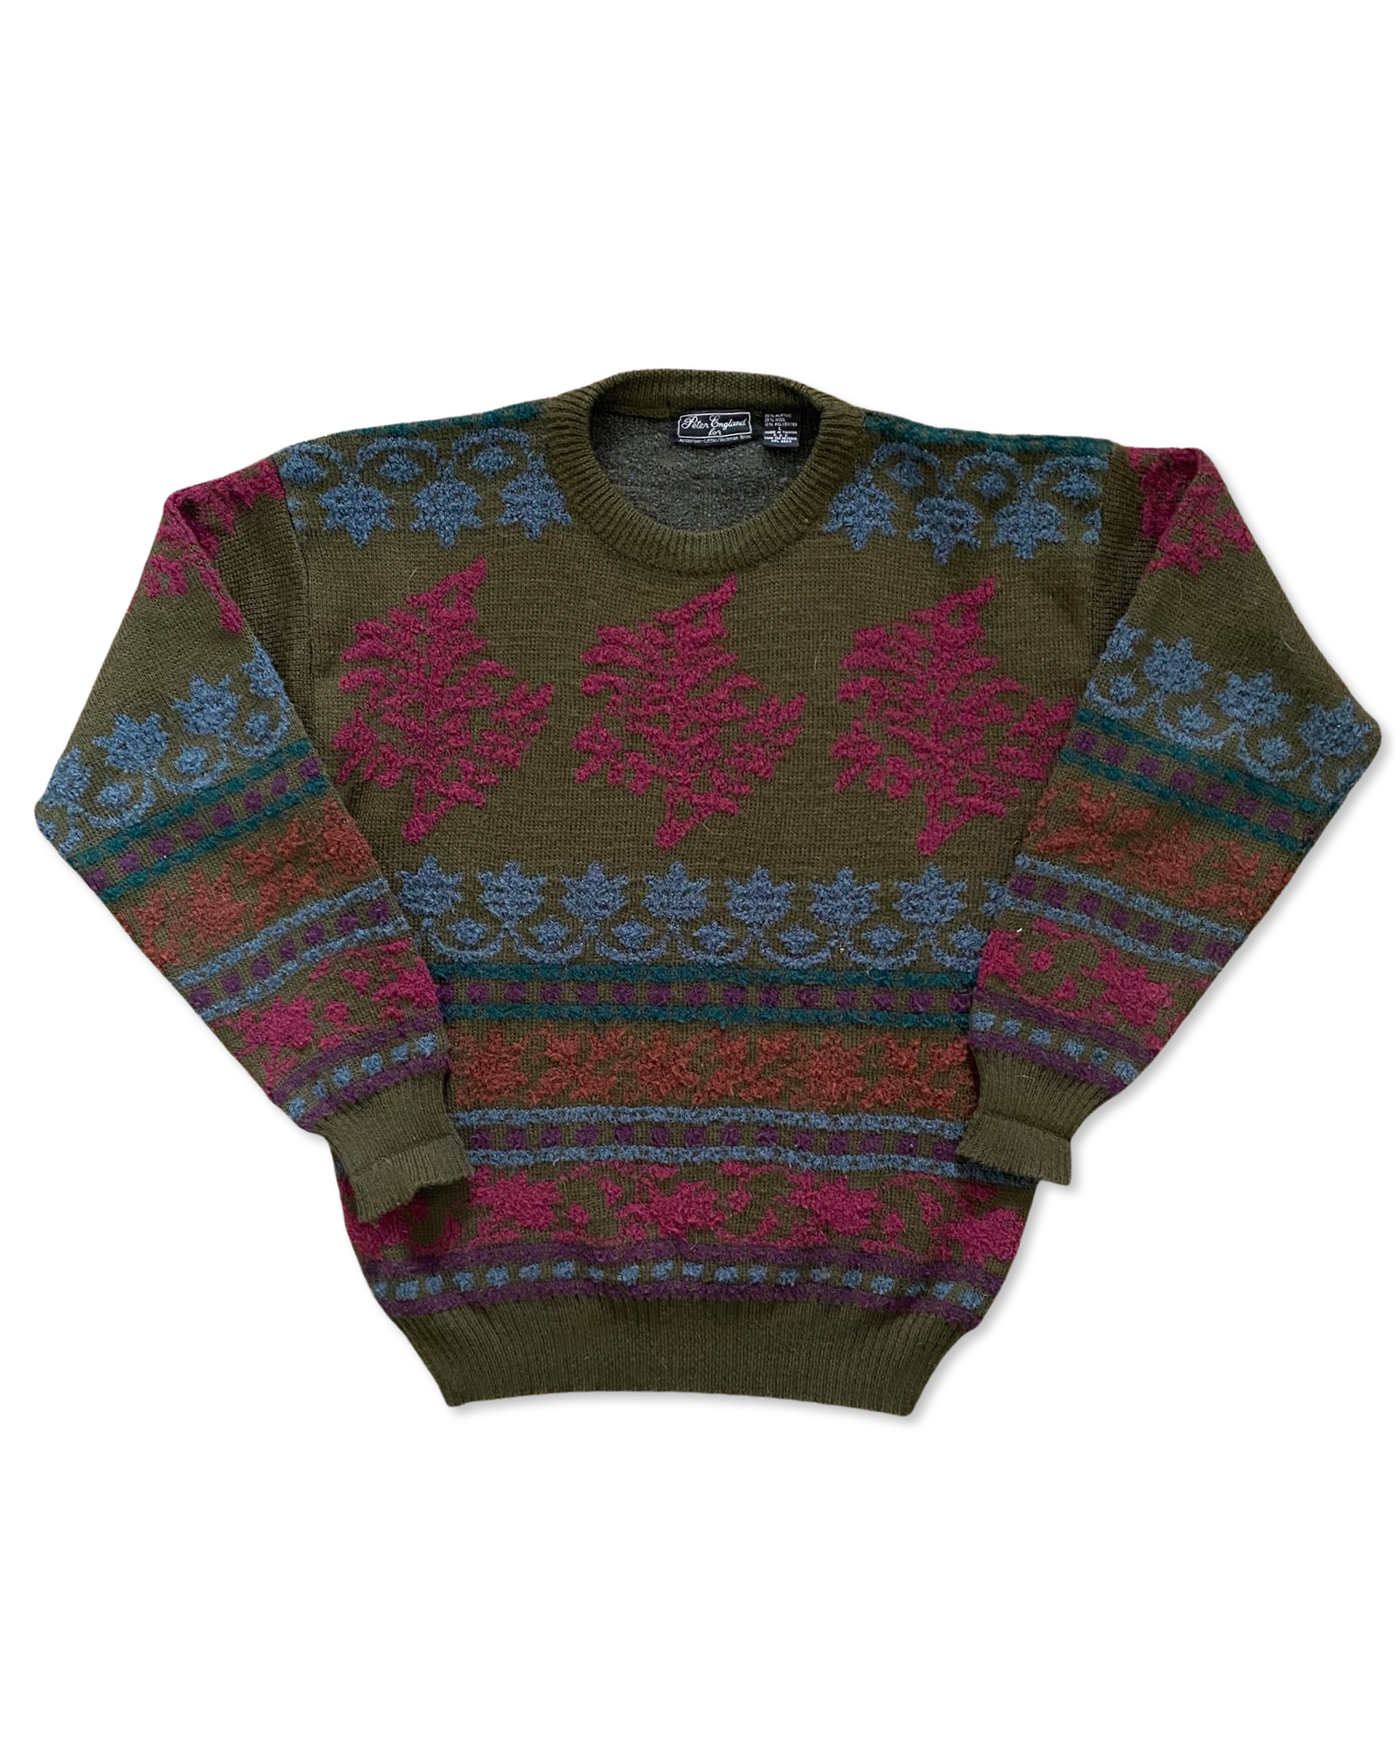 Vintage 90s Acrylic Knit Sweater